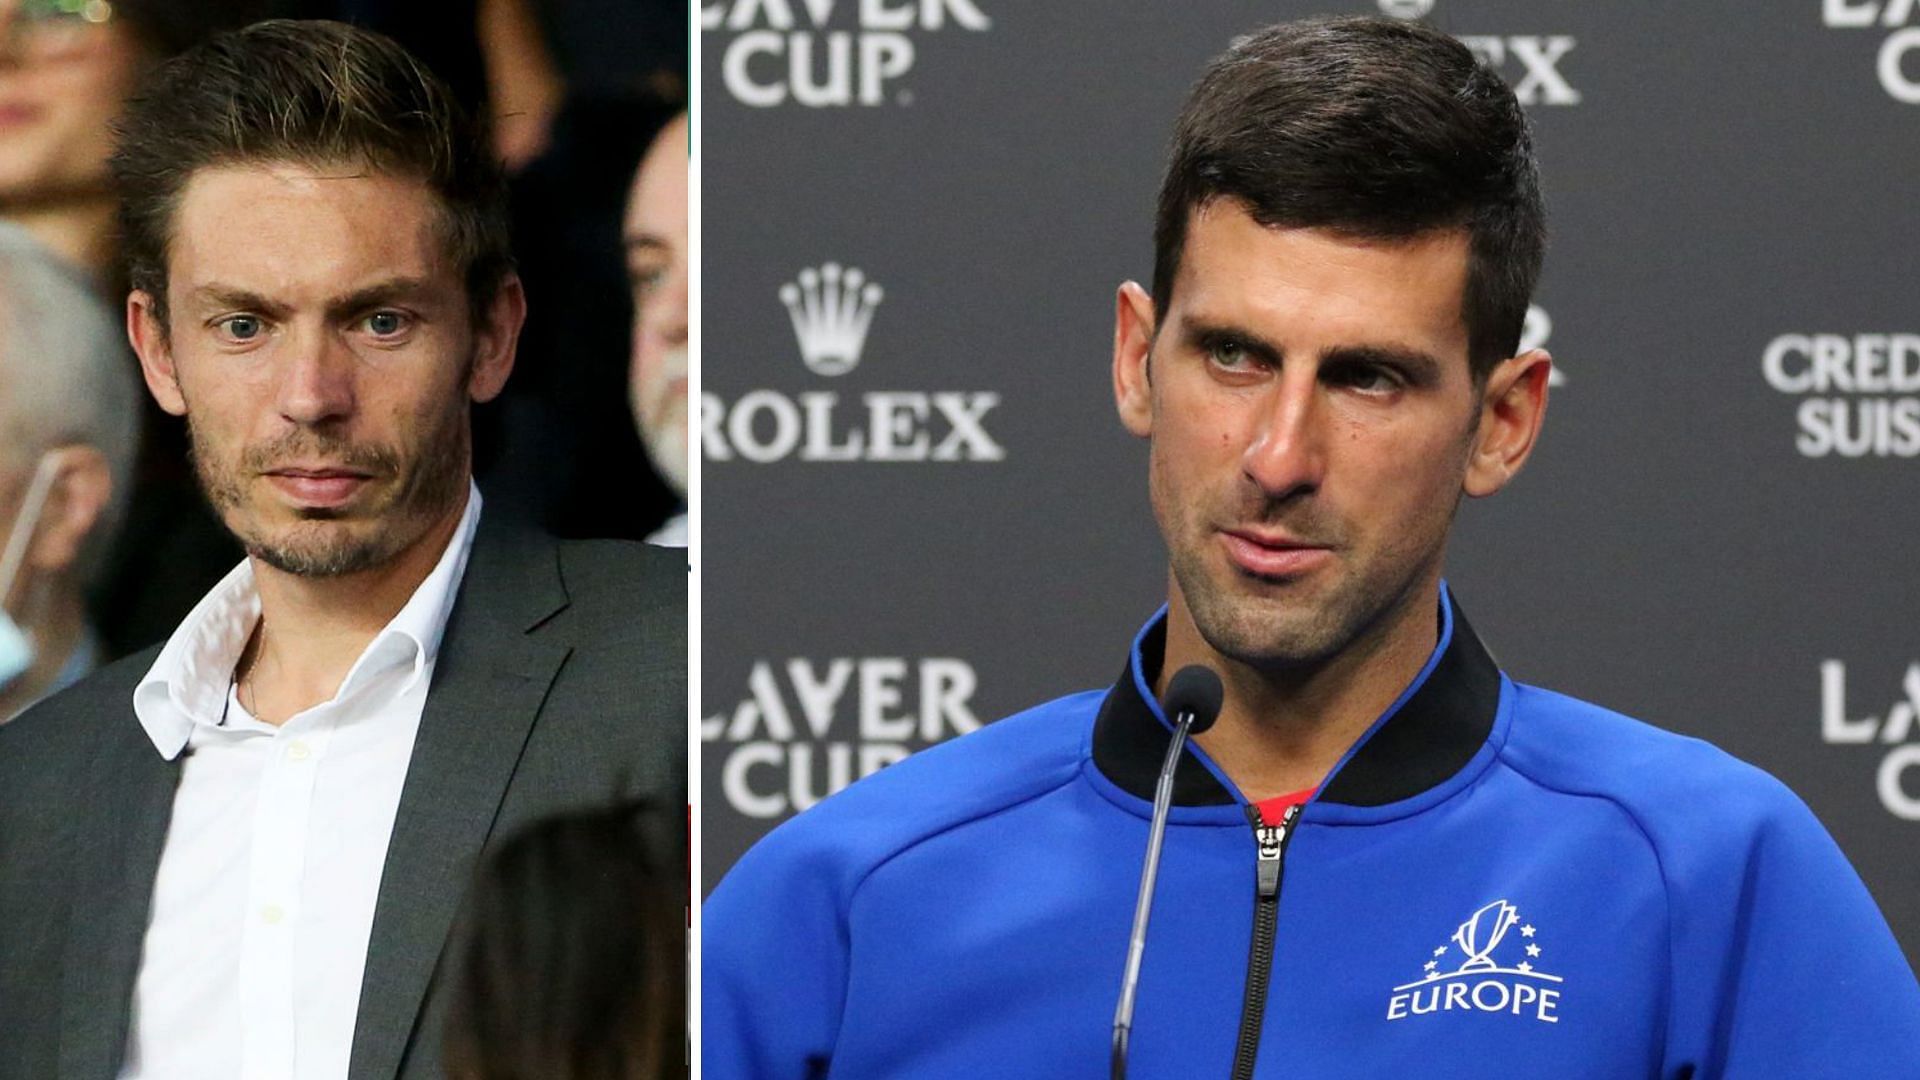 Nicolas Mahut reacts to Novak Djokovic breaking the World No. 1 record